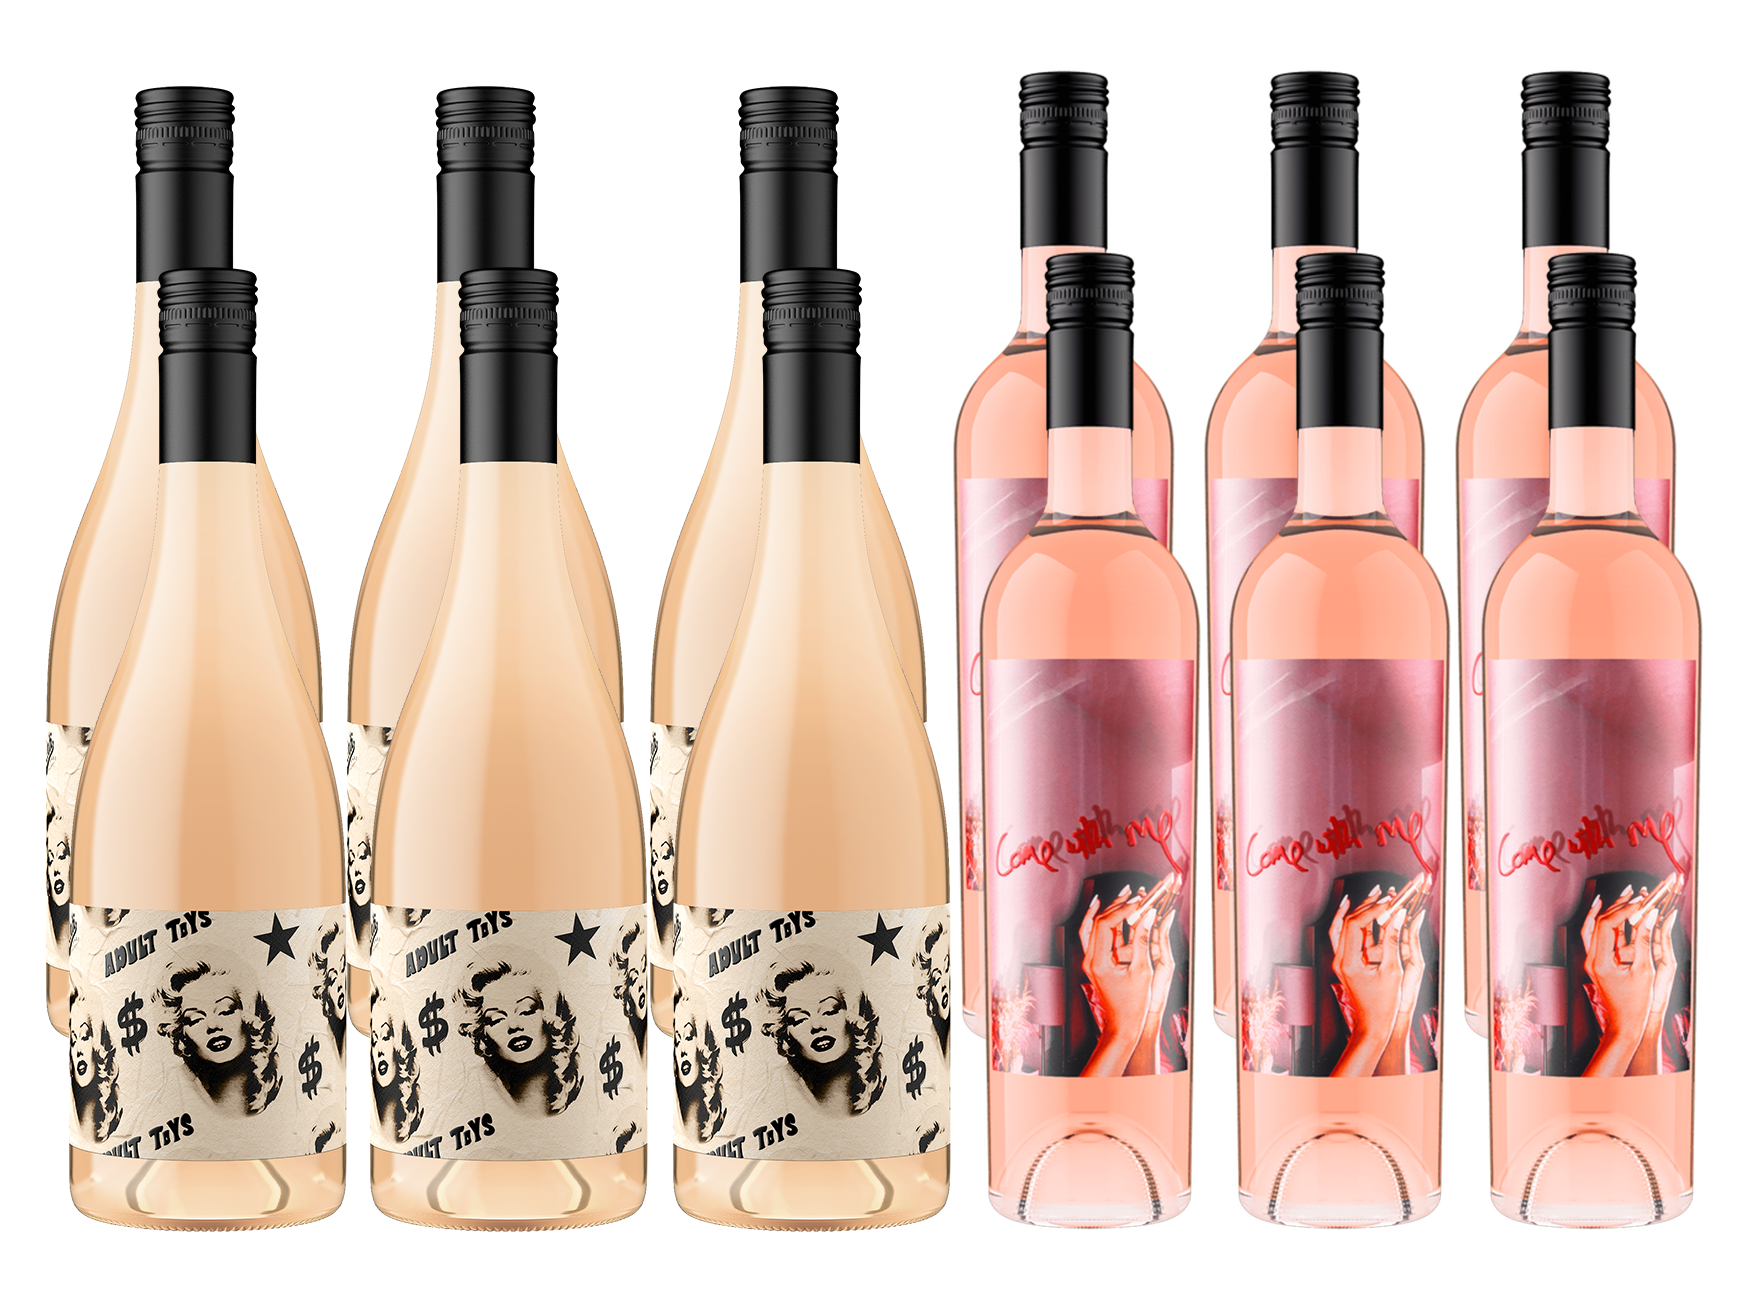 Half-Tank lineup featuring six bottles of Rosé